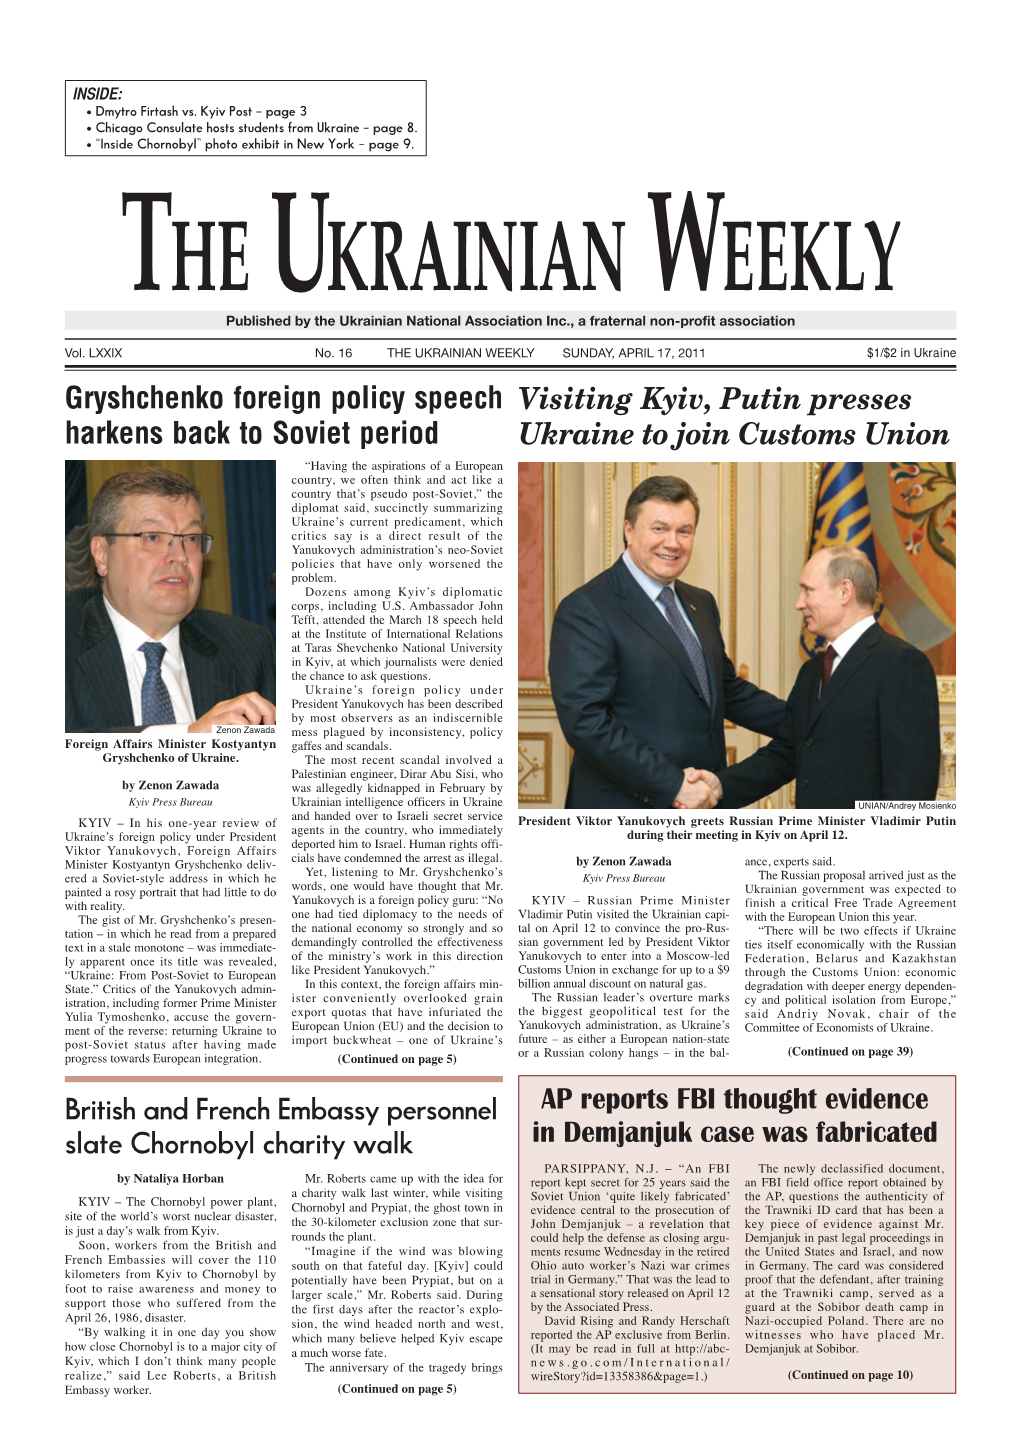 The Ukrainian Weekly 2011, No.16